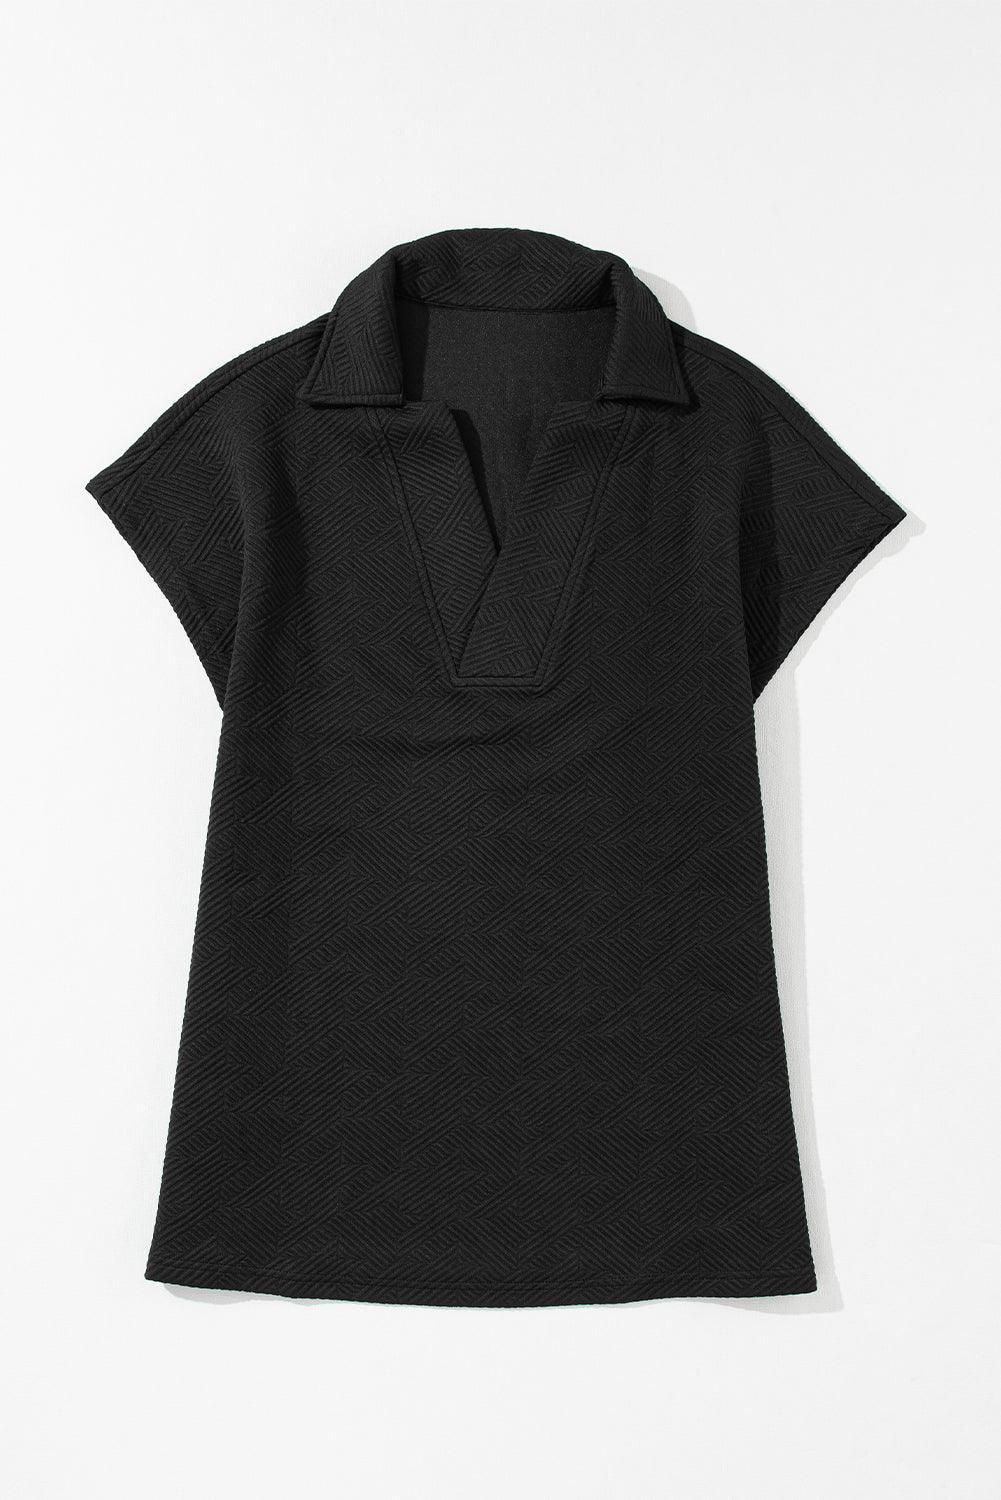 Black Textured V Neck Collared Short Sleeve Top for Women